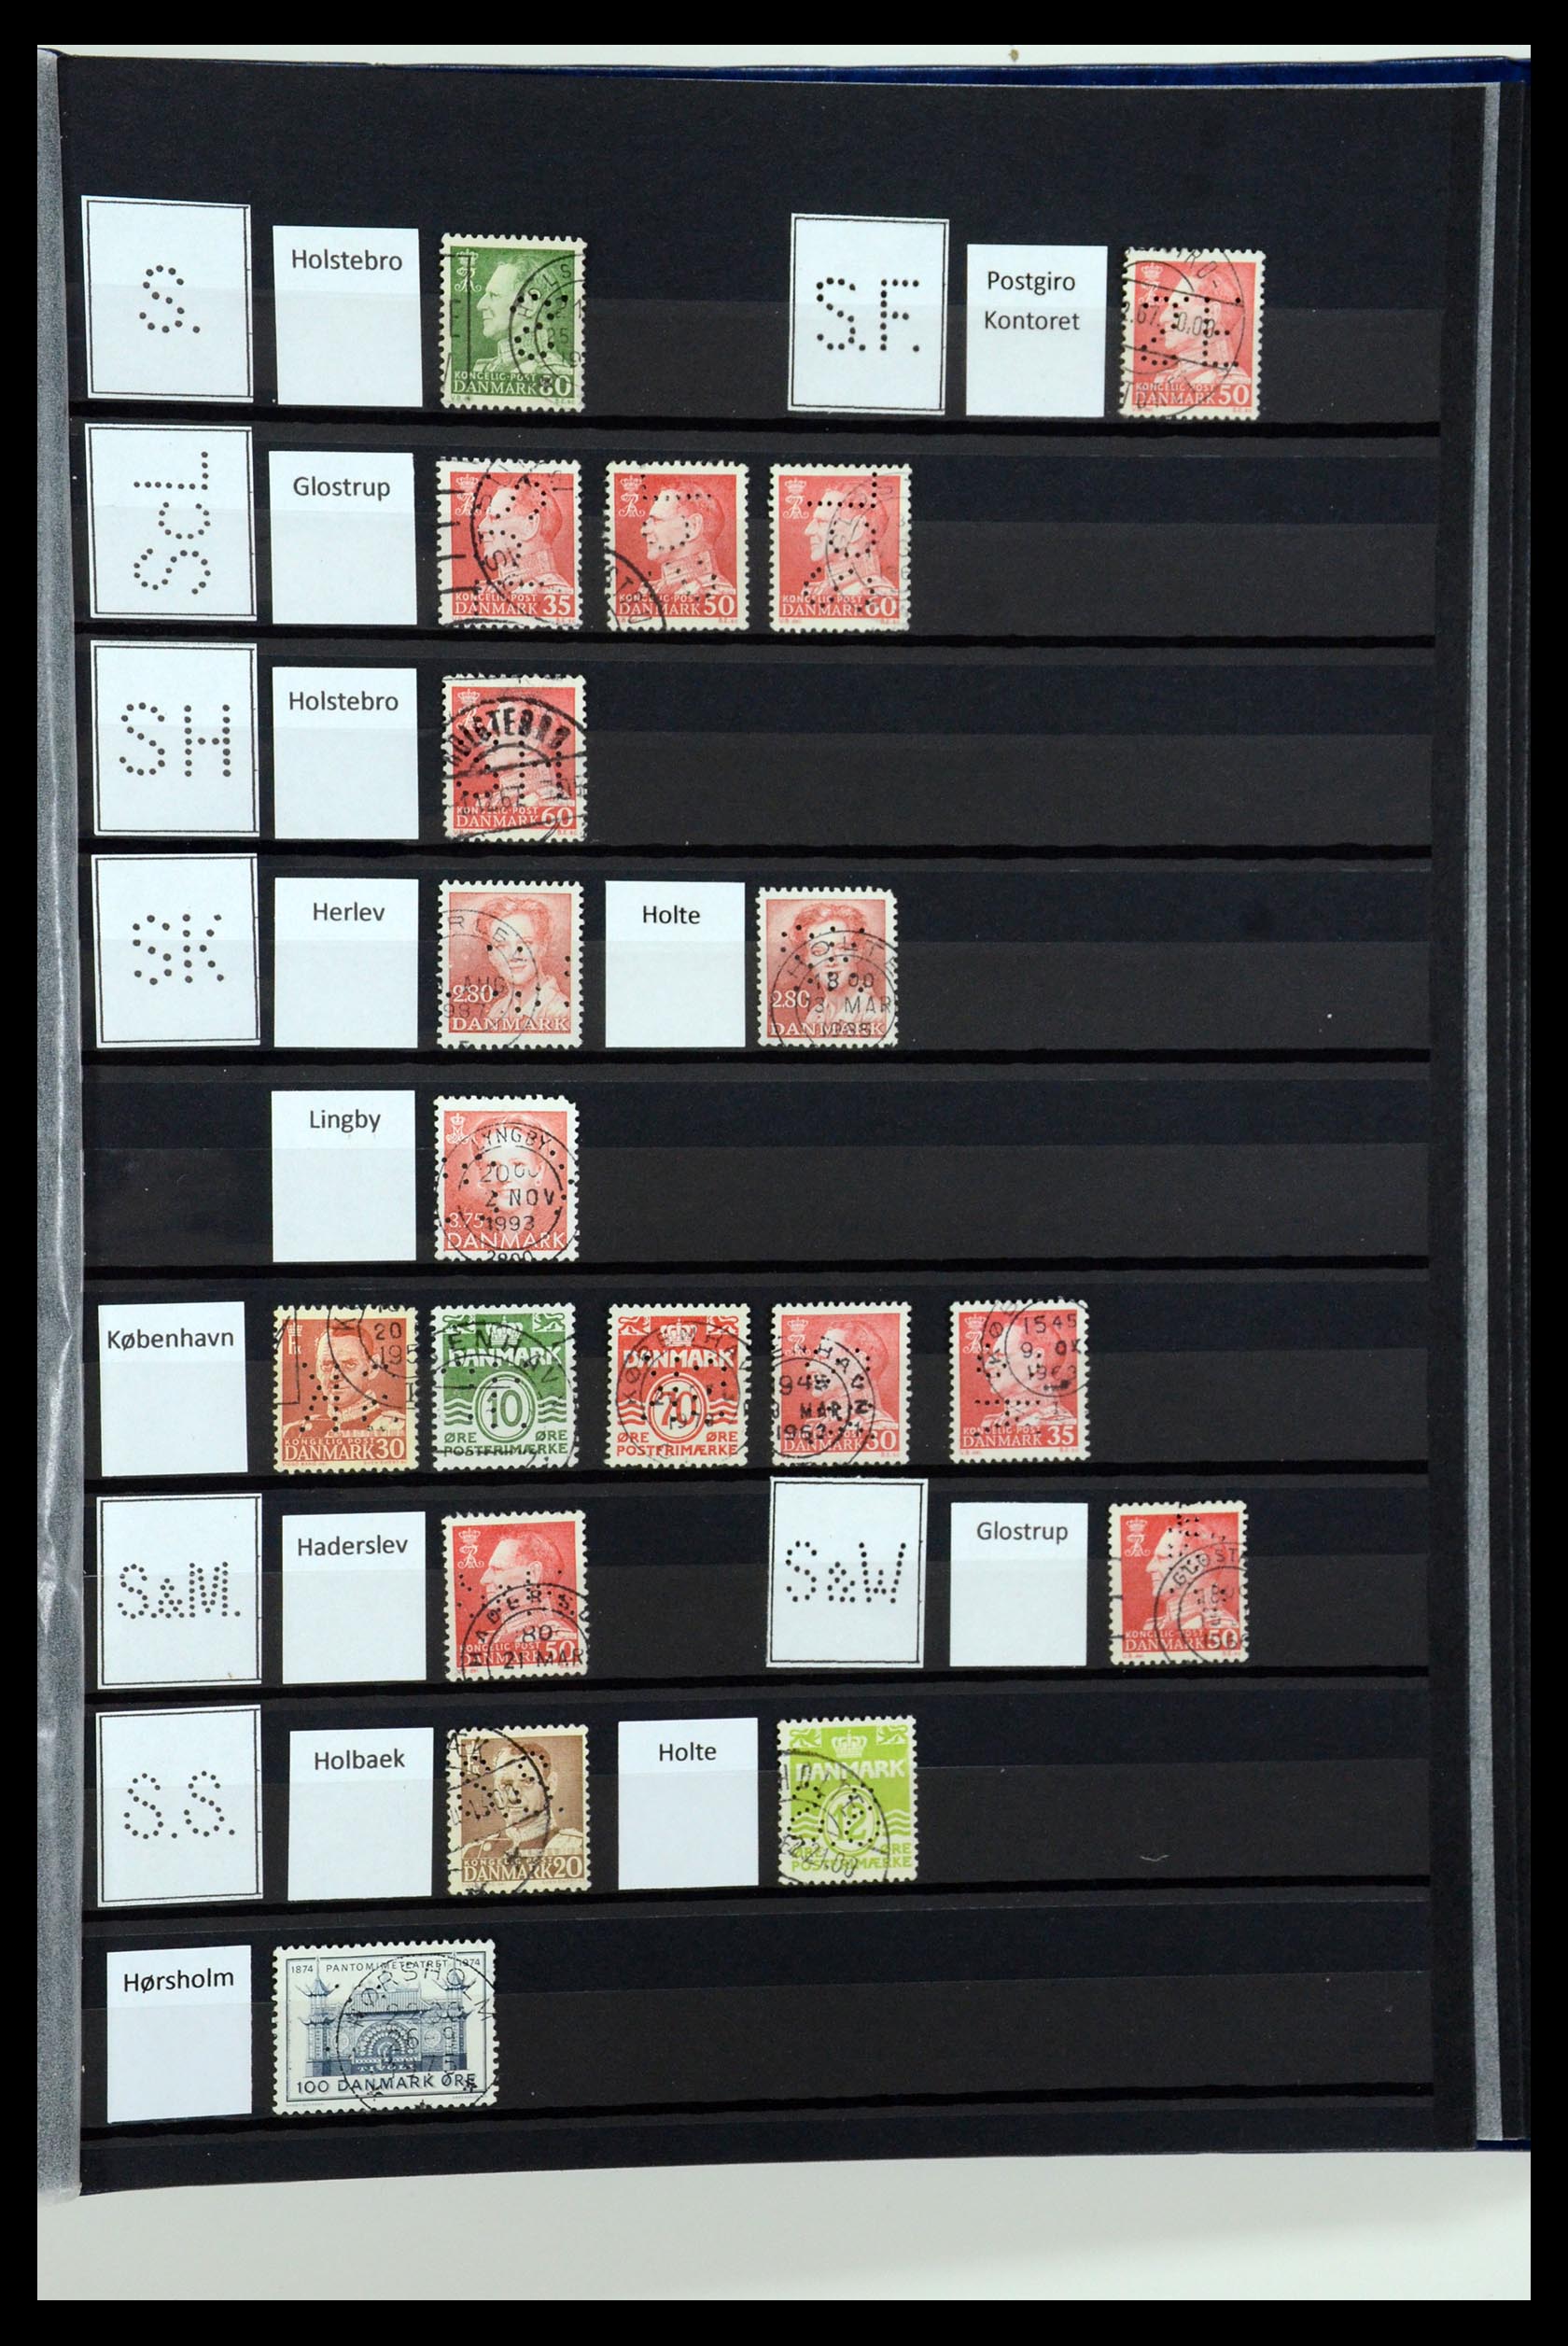 36396 104 - Stamp collection 36396 Denmark perfins.